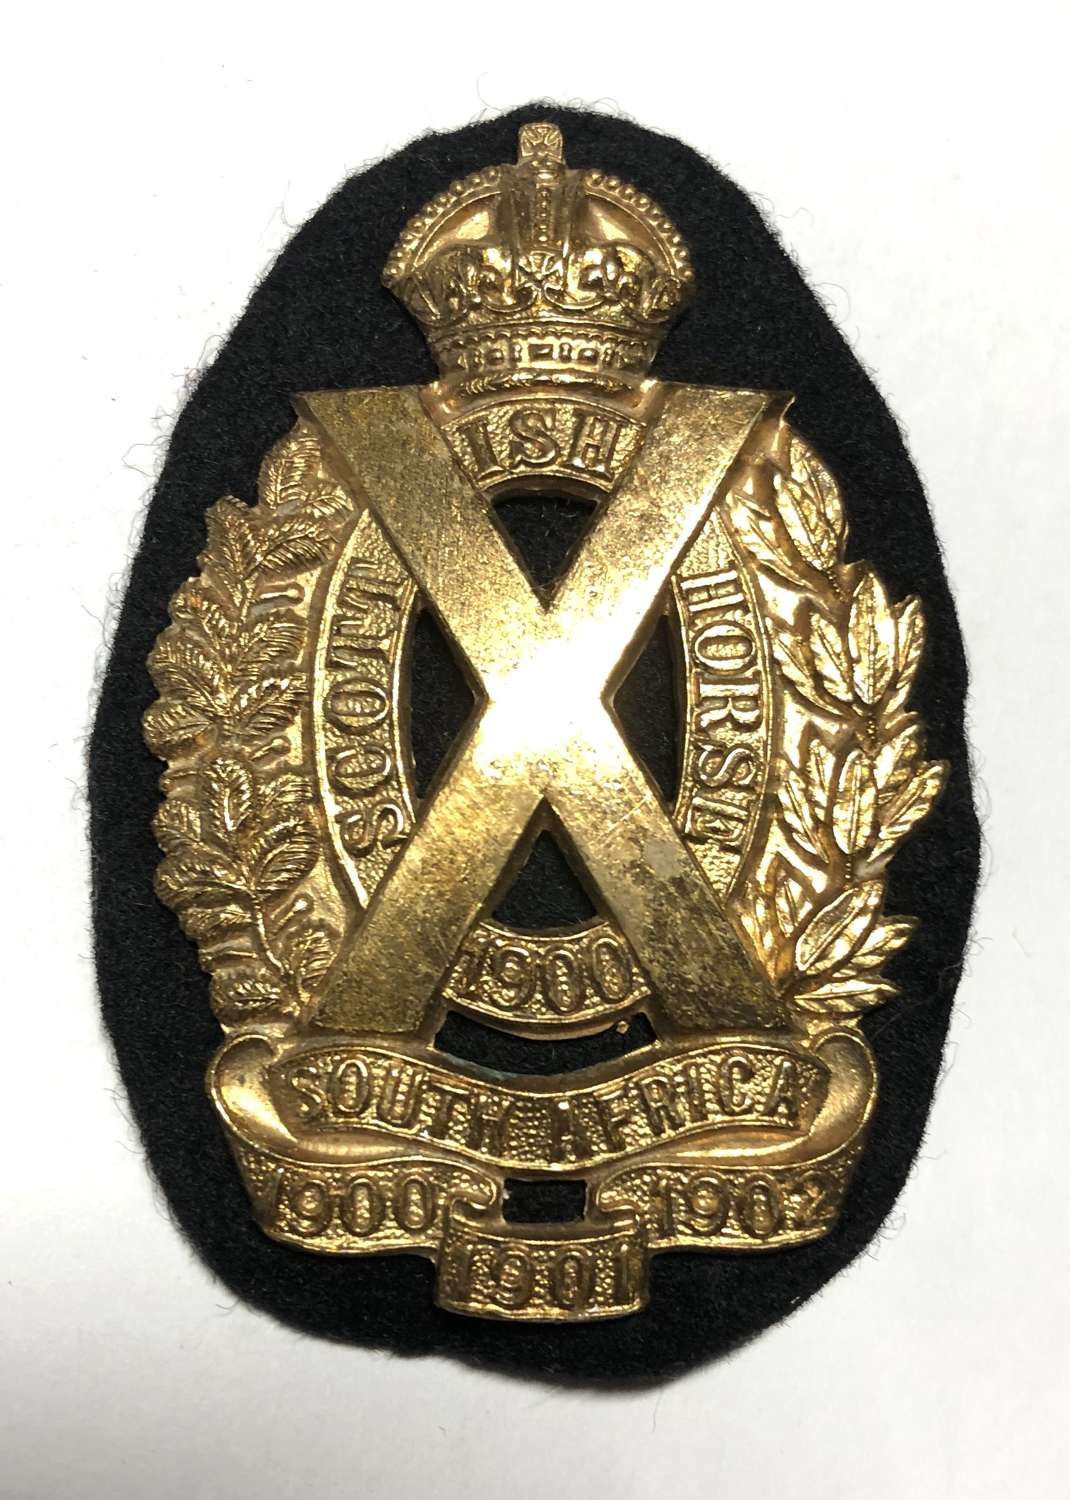 Scottish Horse post 1908 NCO's arm badge